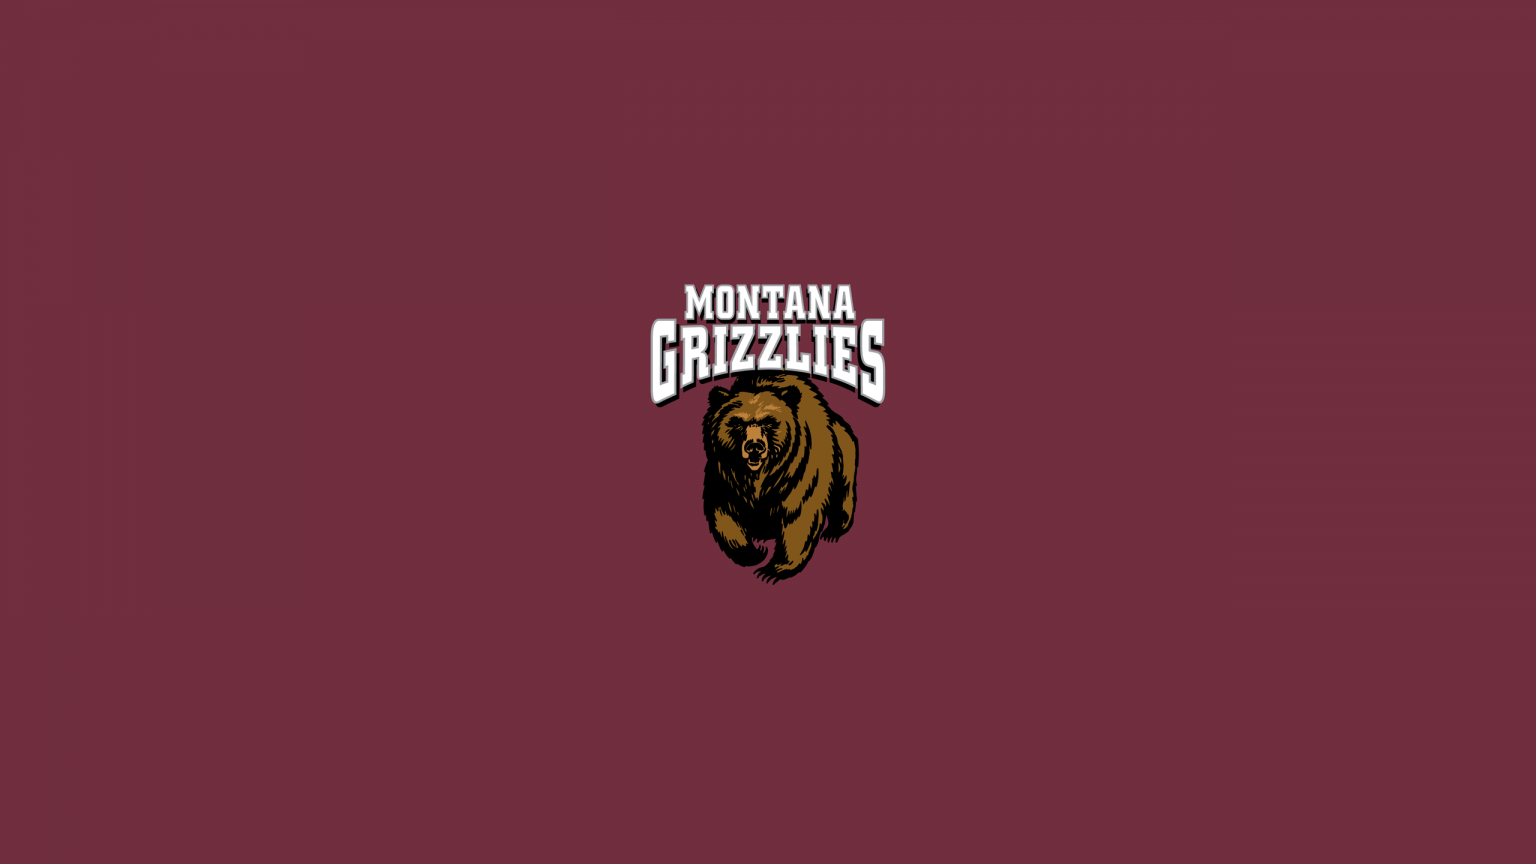 Montana Grizzlies Basketball - NCAAB - Square Bettor